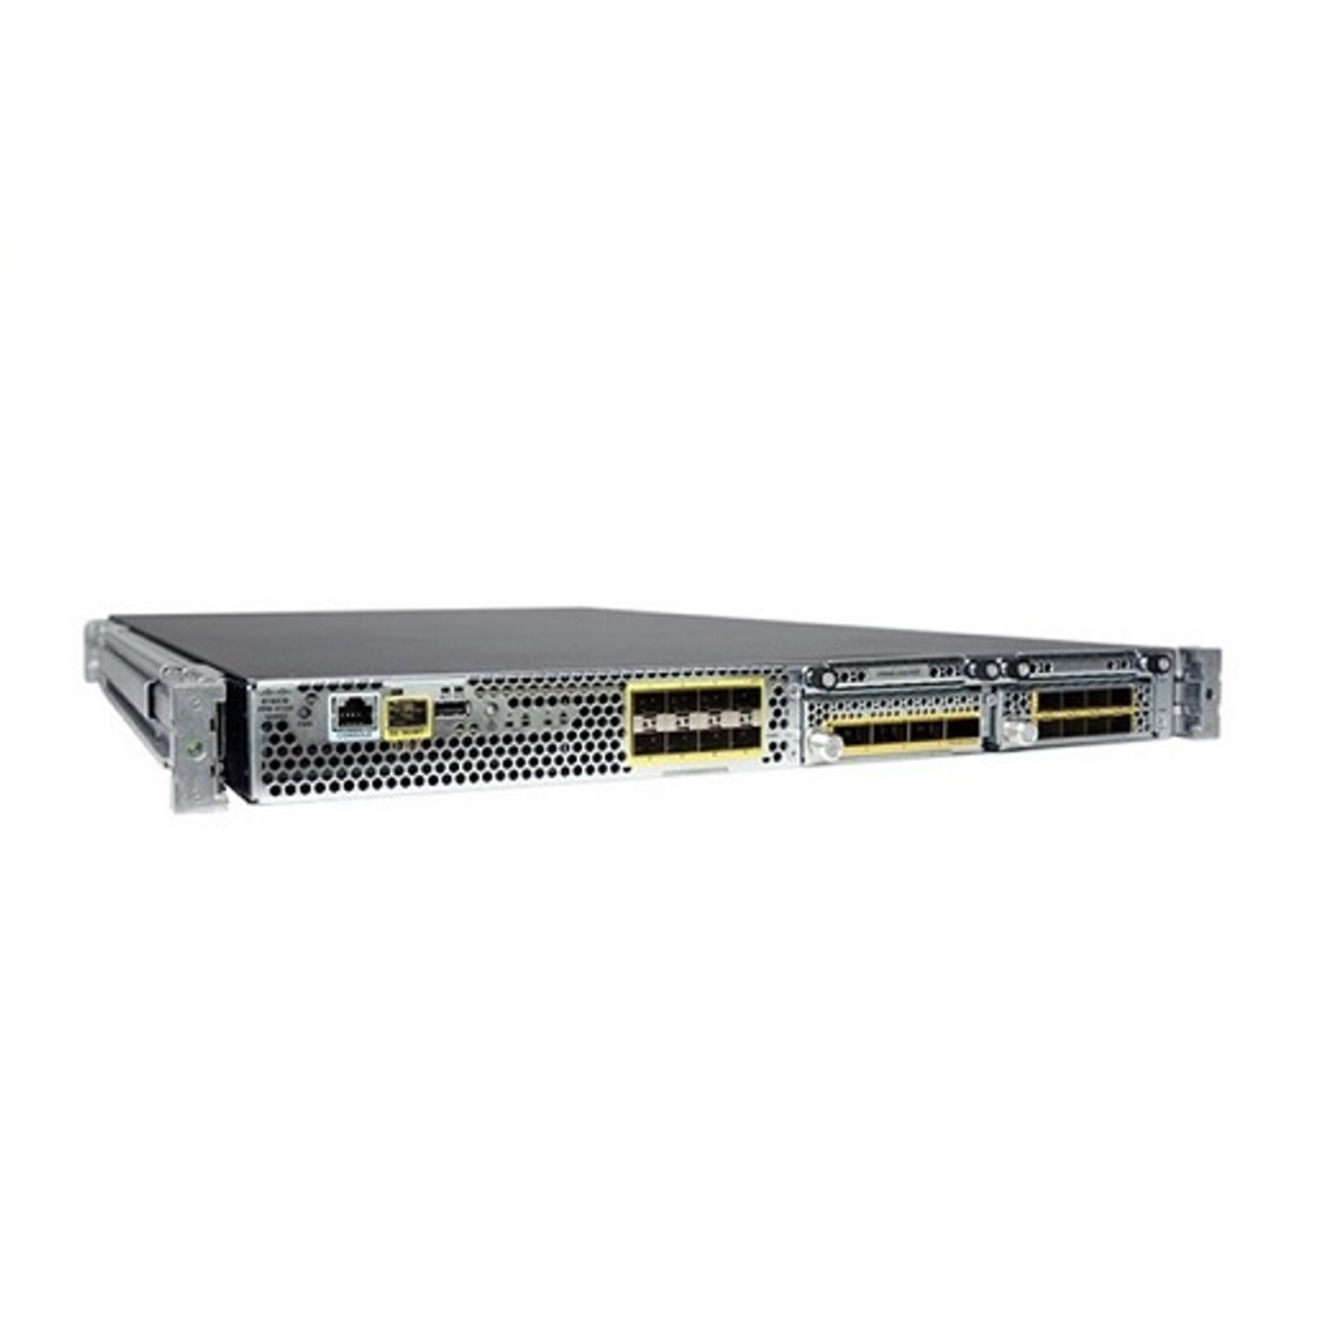 Cisco Firepower 4110 NGIPS Appliance, 1RU, 2 x Network Module Bays